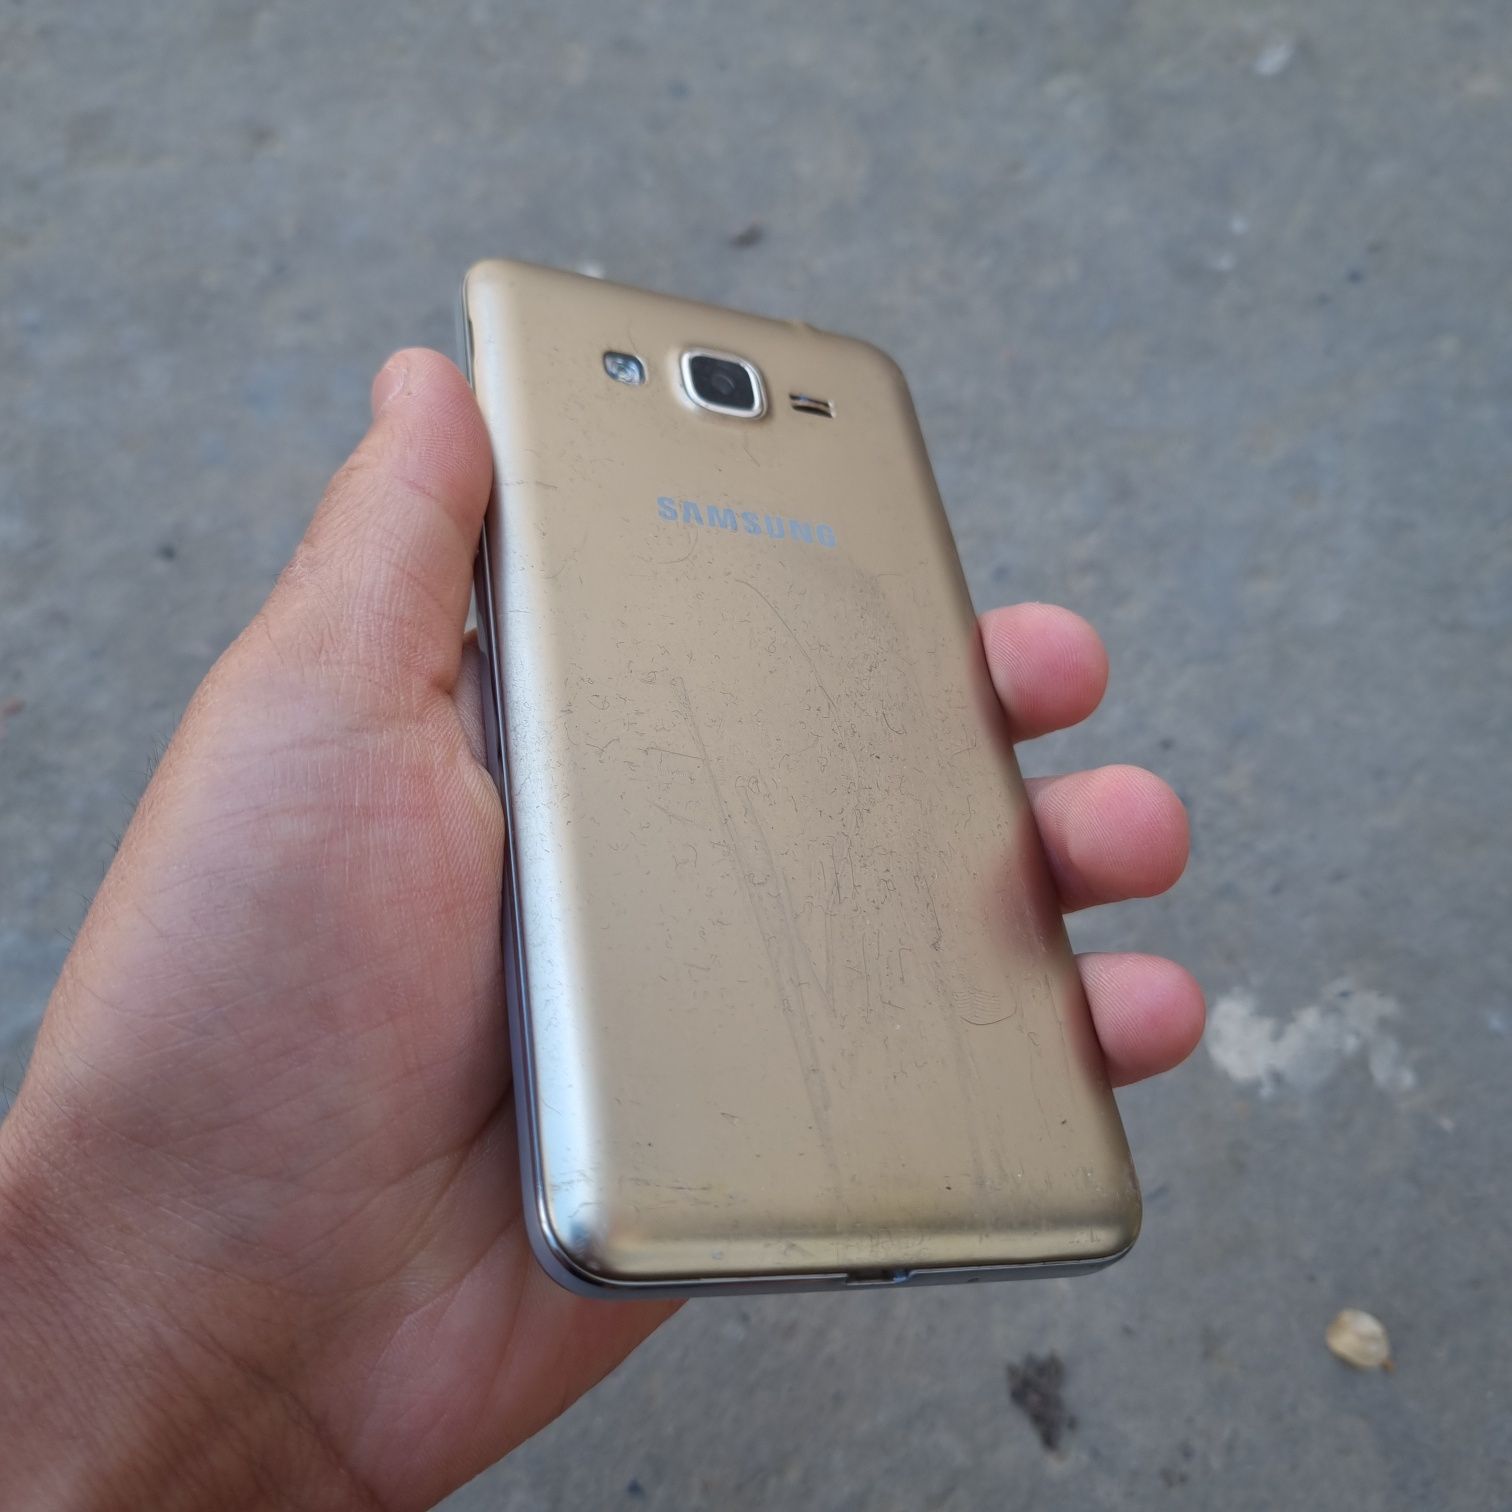 Samsung Galaxy J2 sotiladi